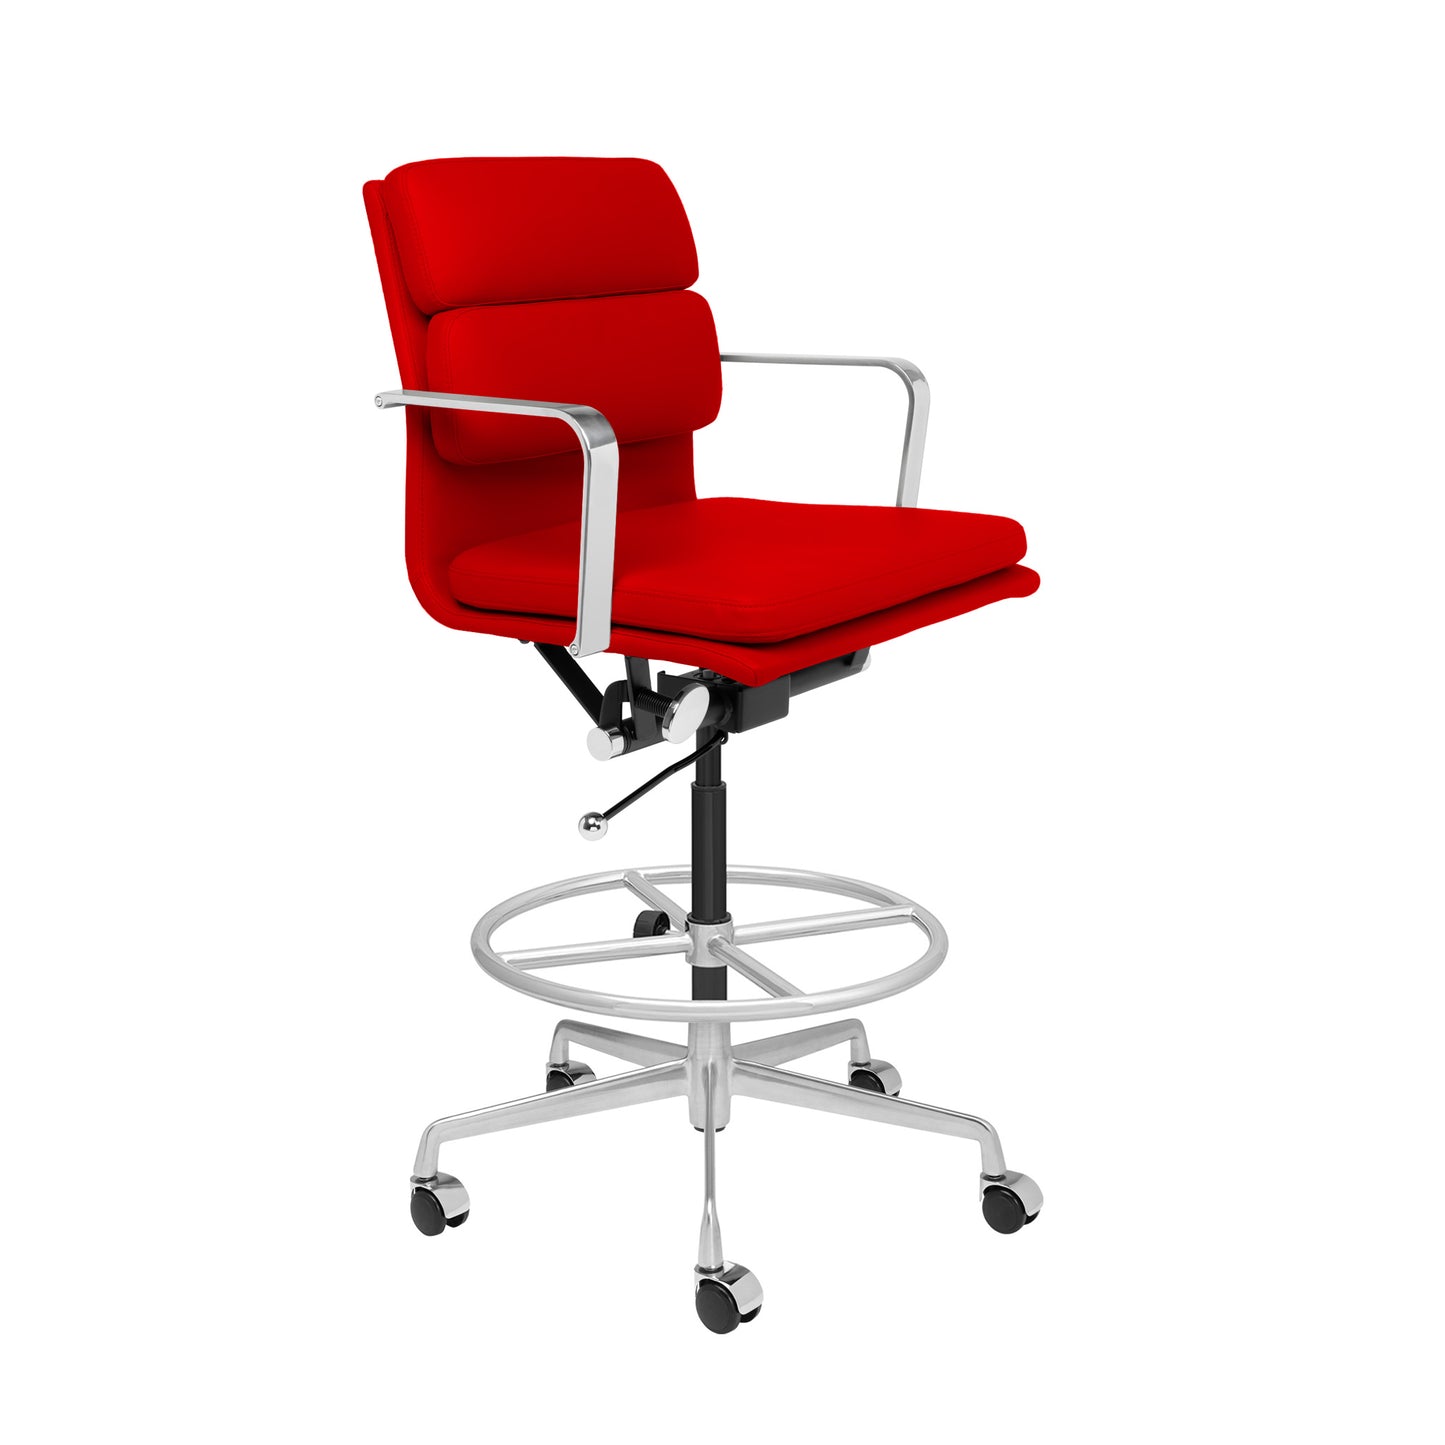 SHIPS MAY 17TH - SOHO II Padded Drafting Chair (Red)